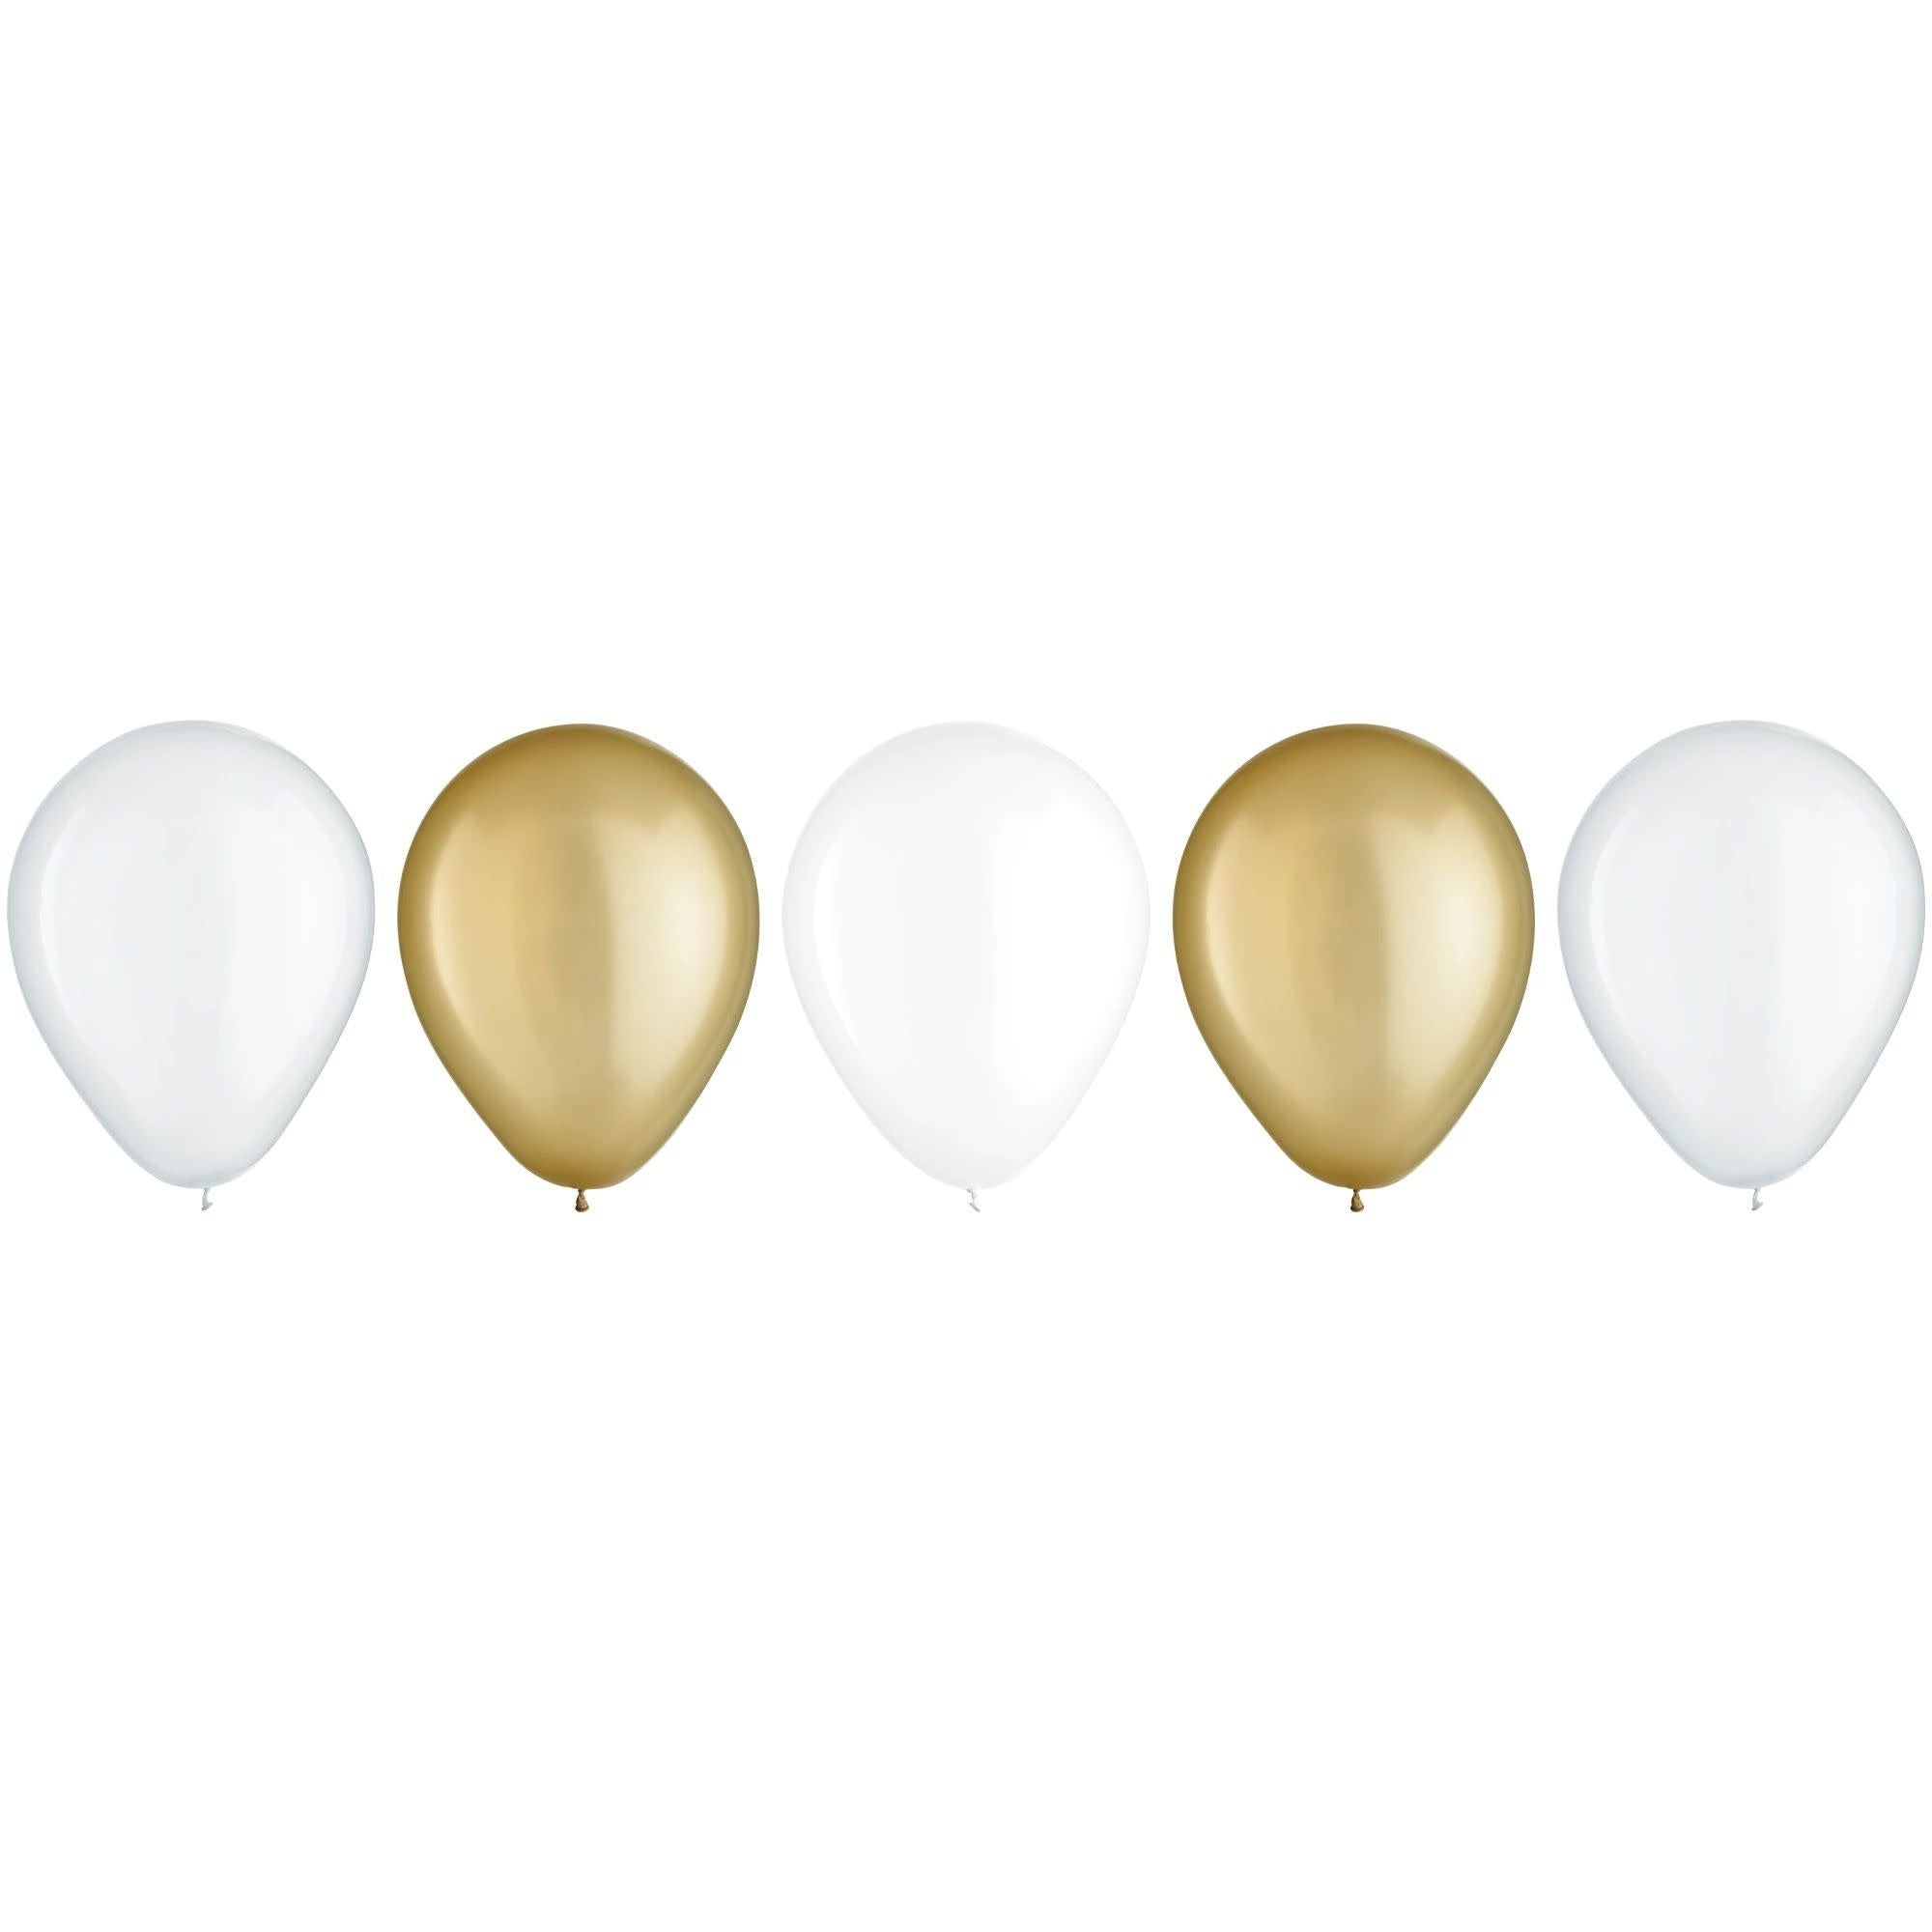 Golden Latex Balloons Assortments 11in, 15pcs